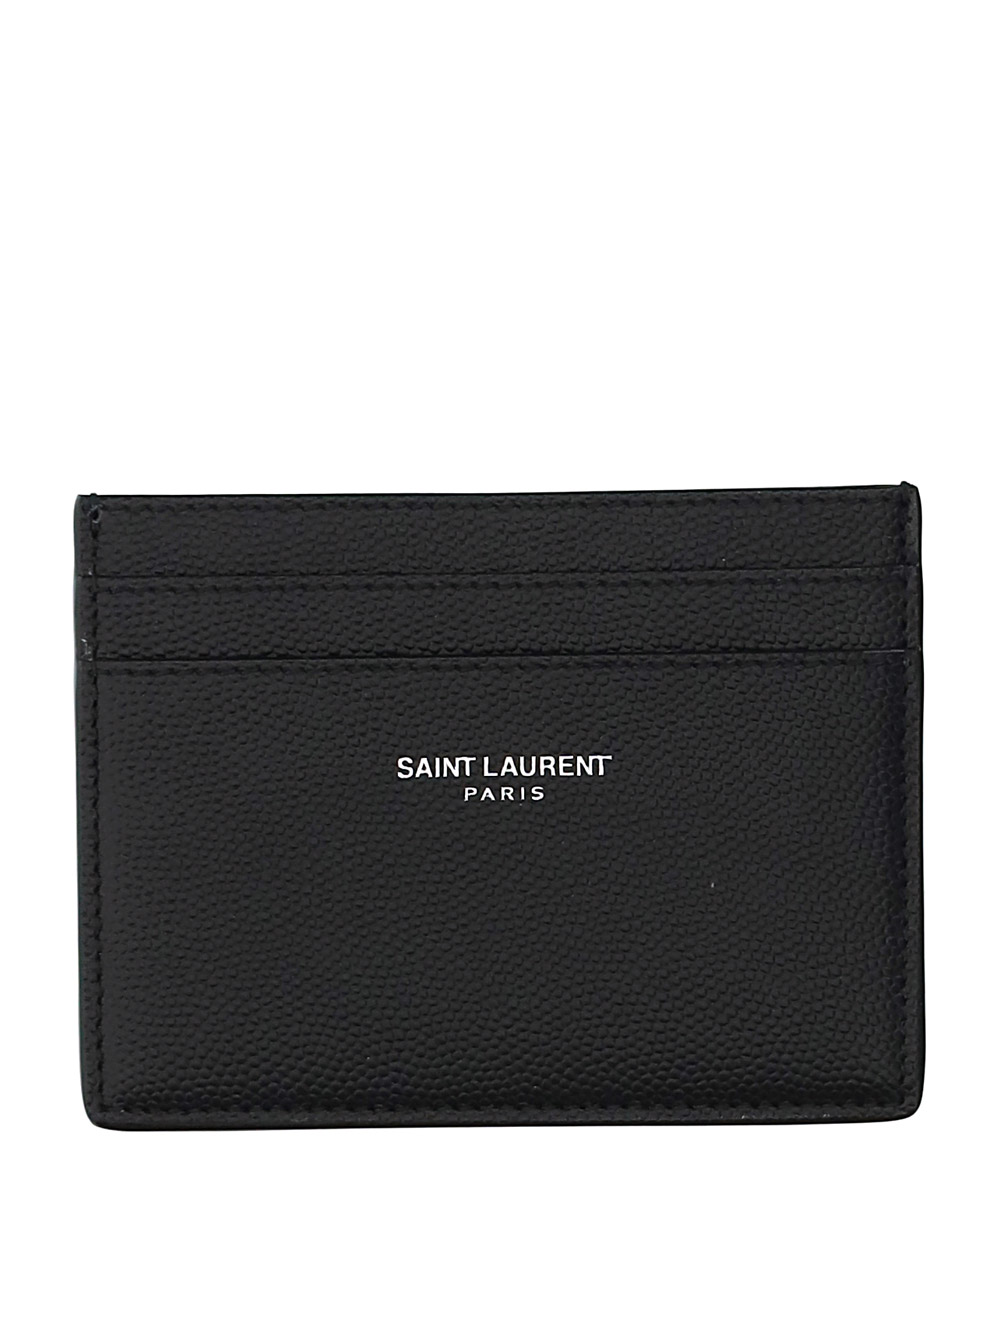 Saint Laurent Credit Card Holder In Nero